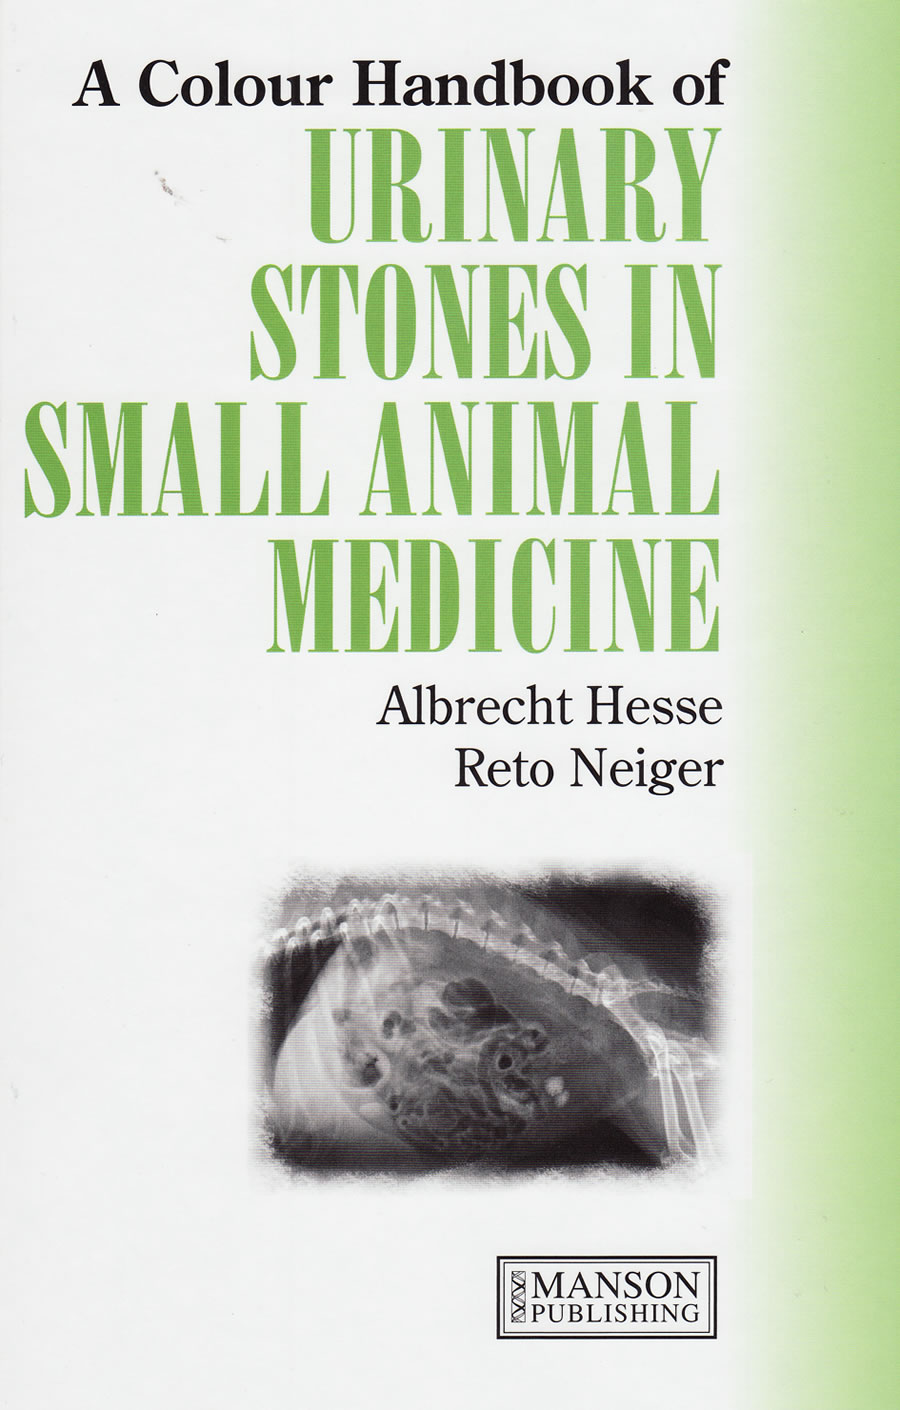 A colour handbook of urinary stones in small animal medicine